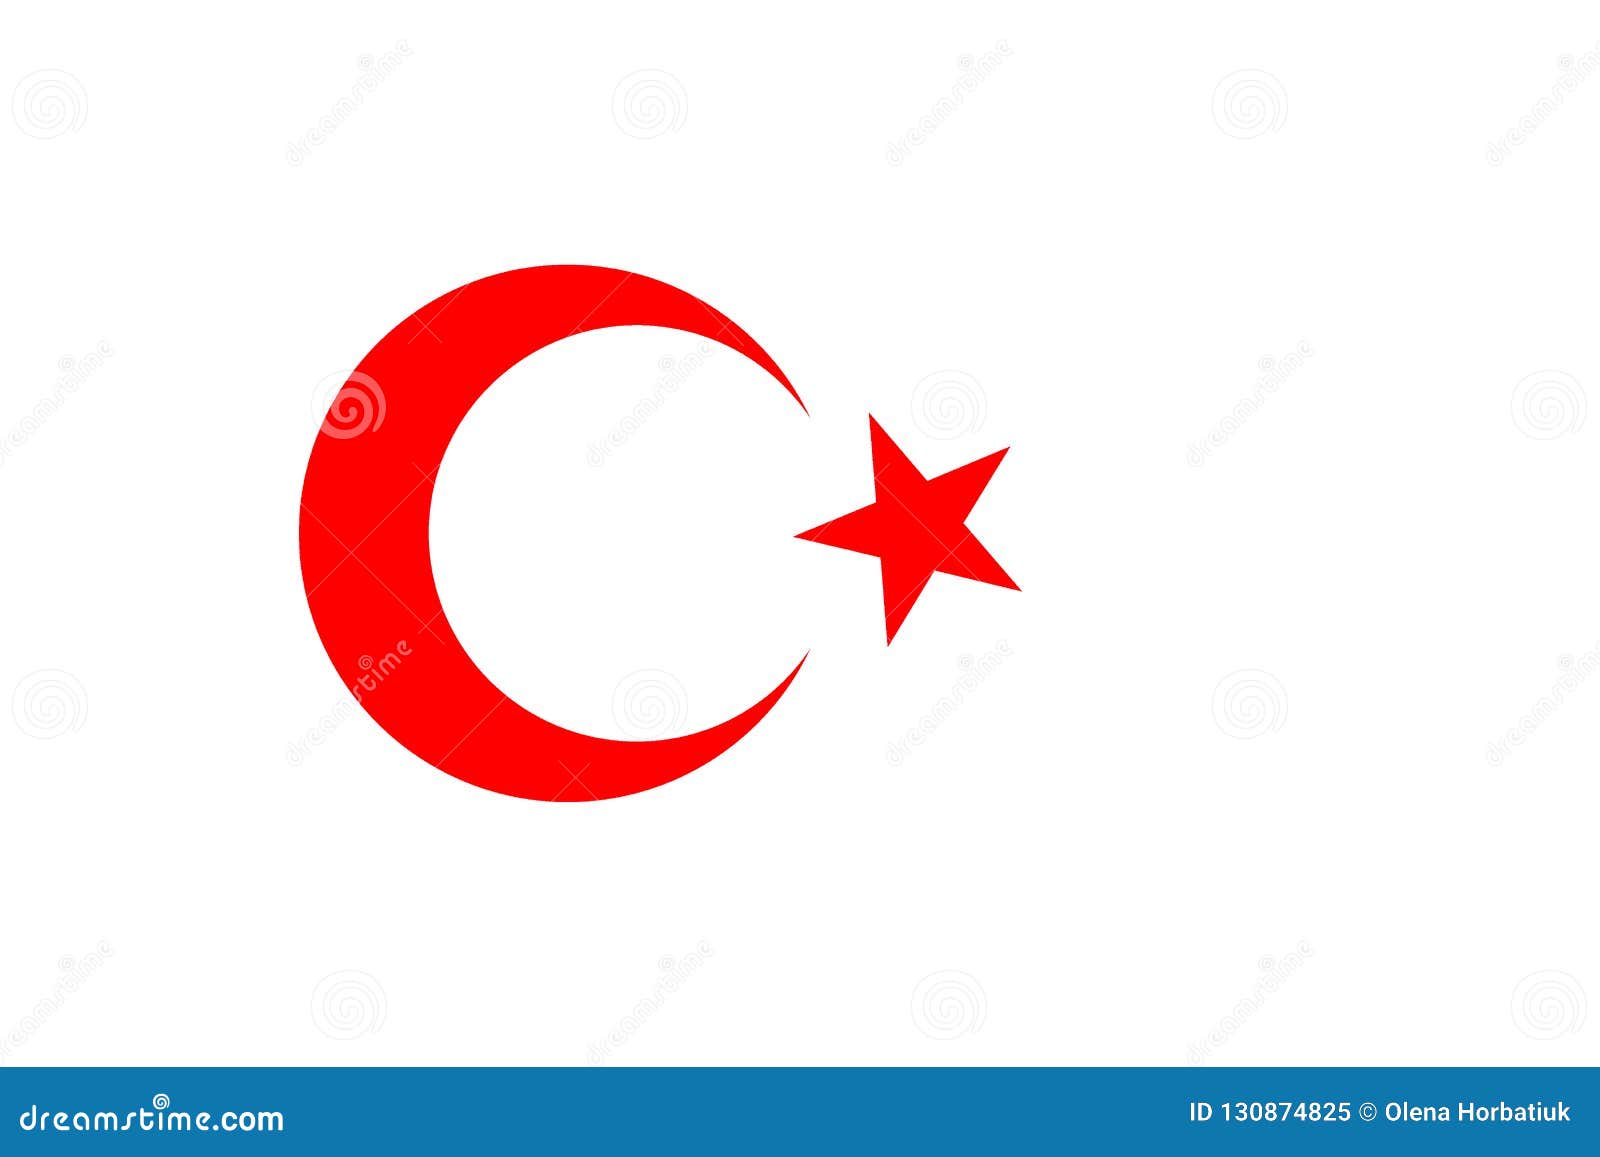 Download Vector Background Of Turkey Flag Stock Vector ...